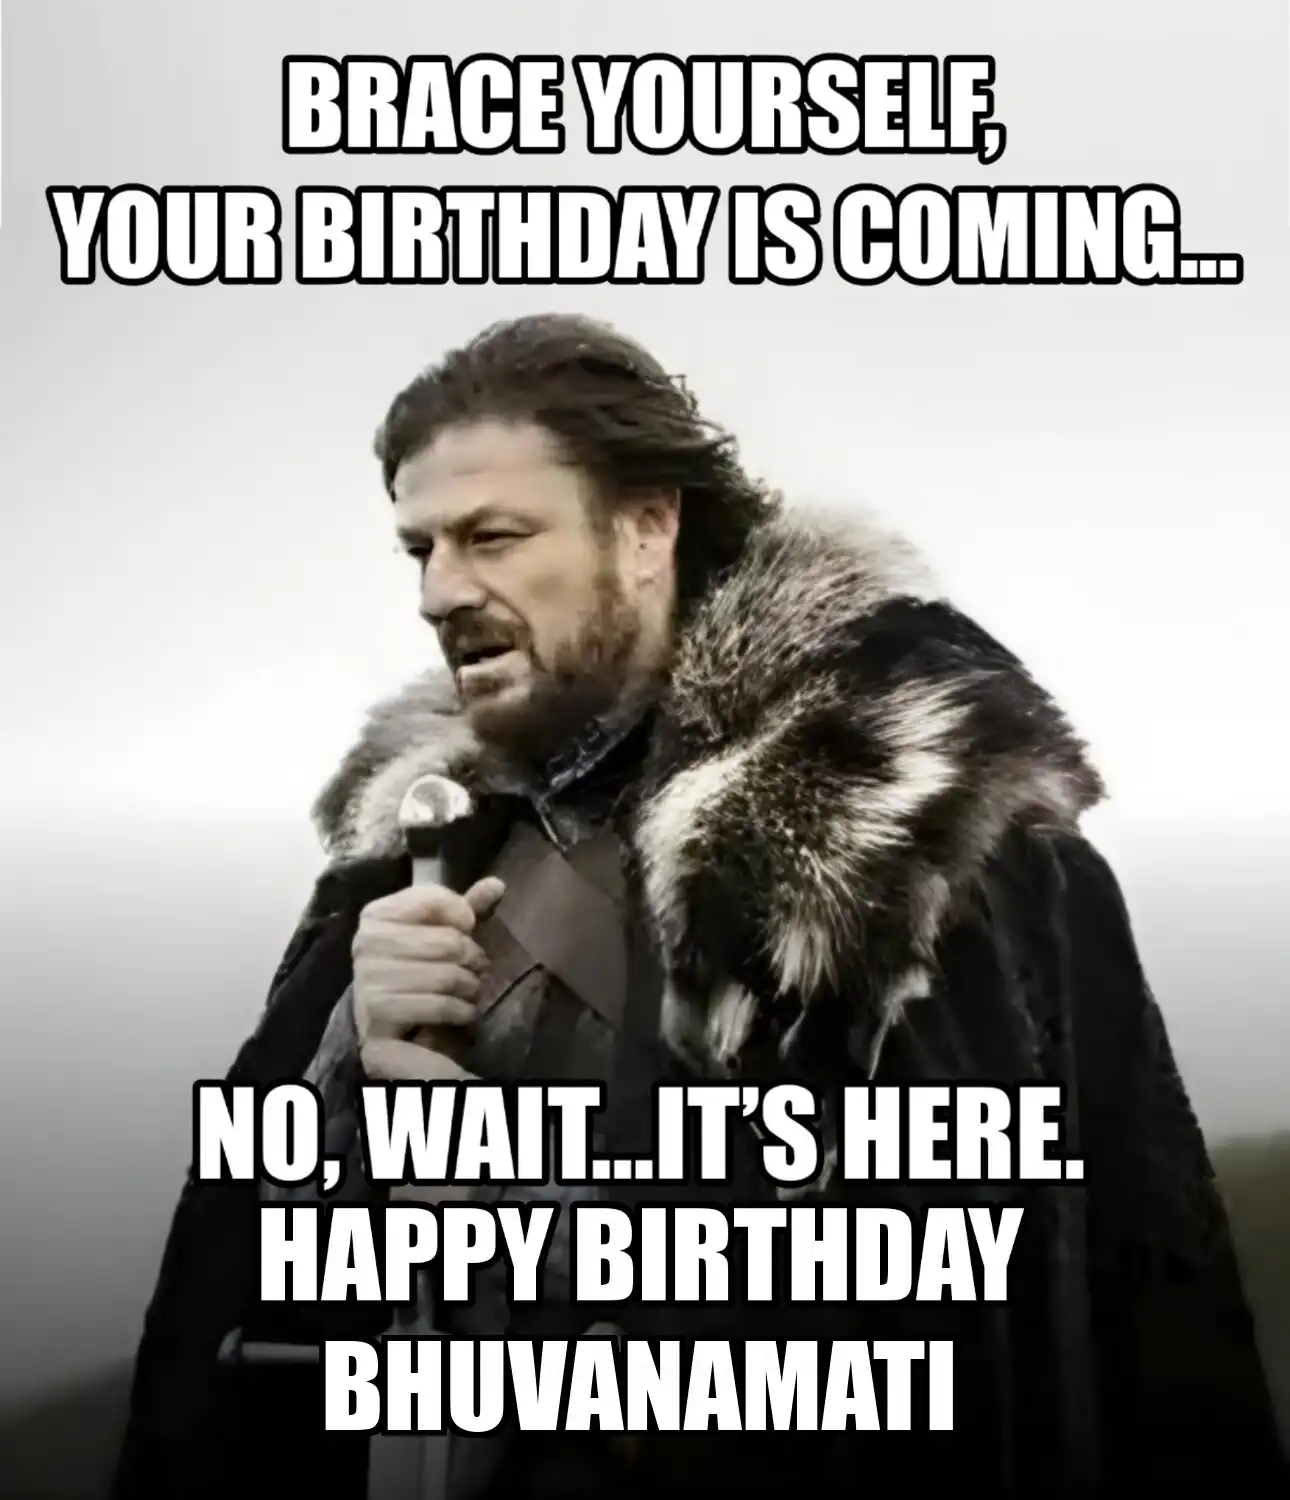 Happy Birthday Bhuvanamati Brace Yourself Your Birthday Is Coming Meme